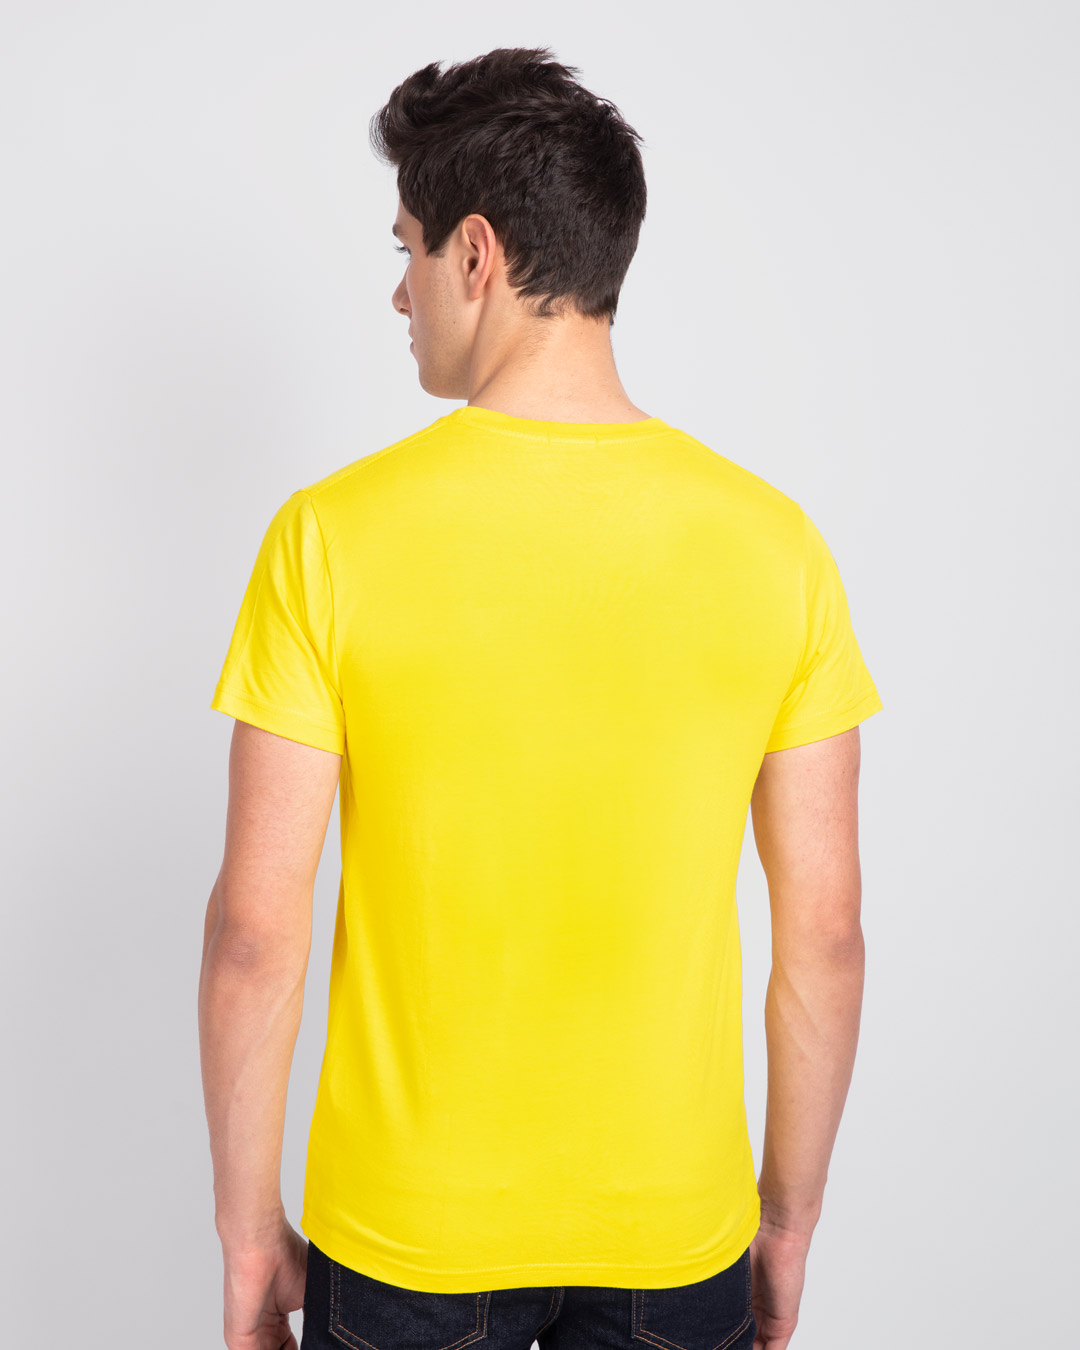 Shop I Would Prefer Neat Half Sleeve T-Shirt Pineapple Yellow -Back